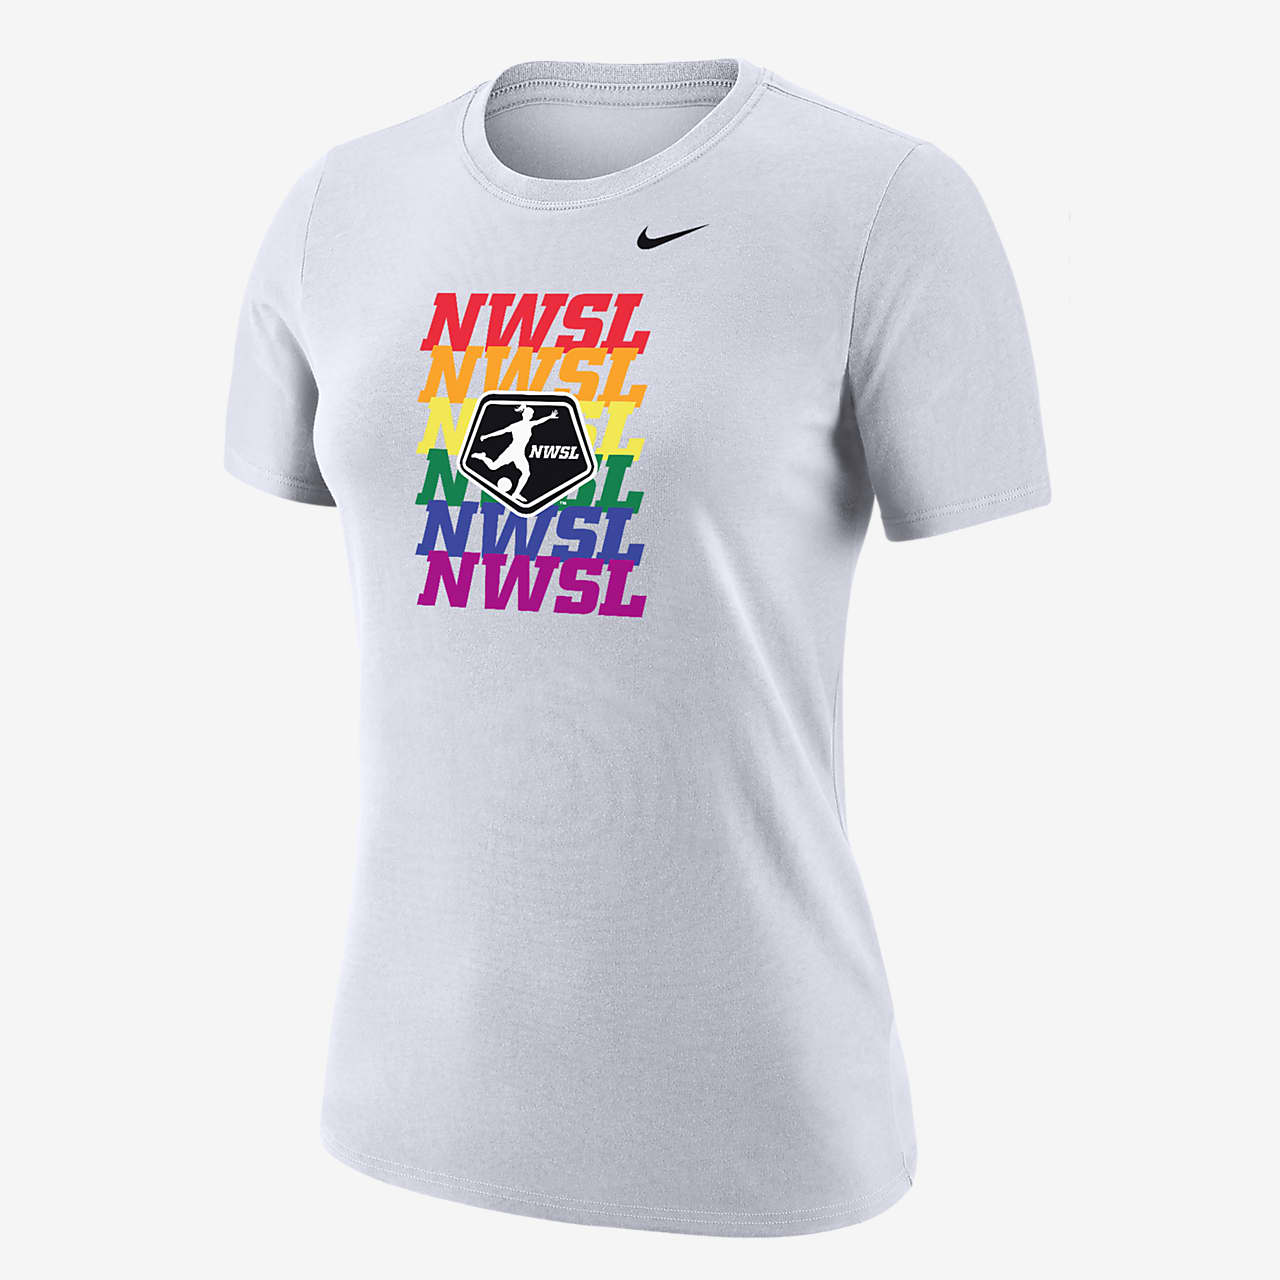 NWSL Women\'s Nike Soccer T-Shirt